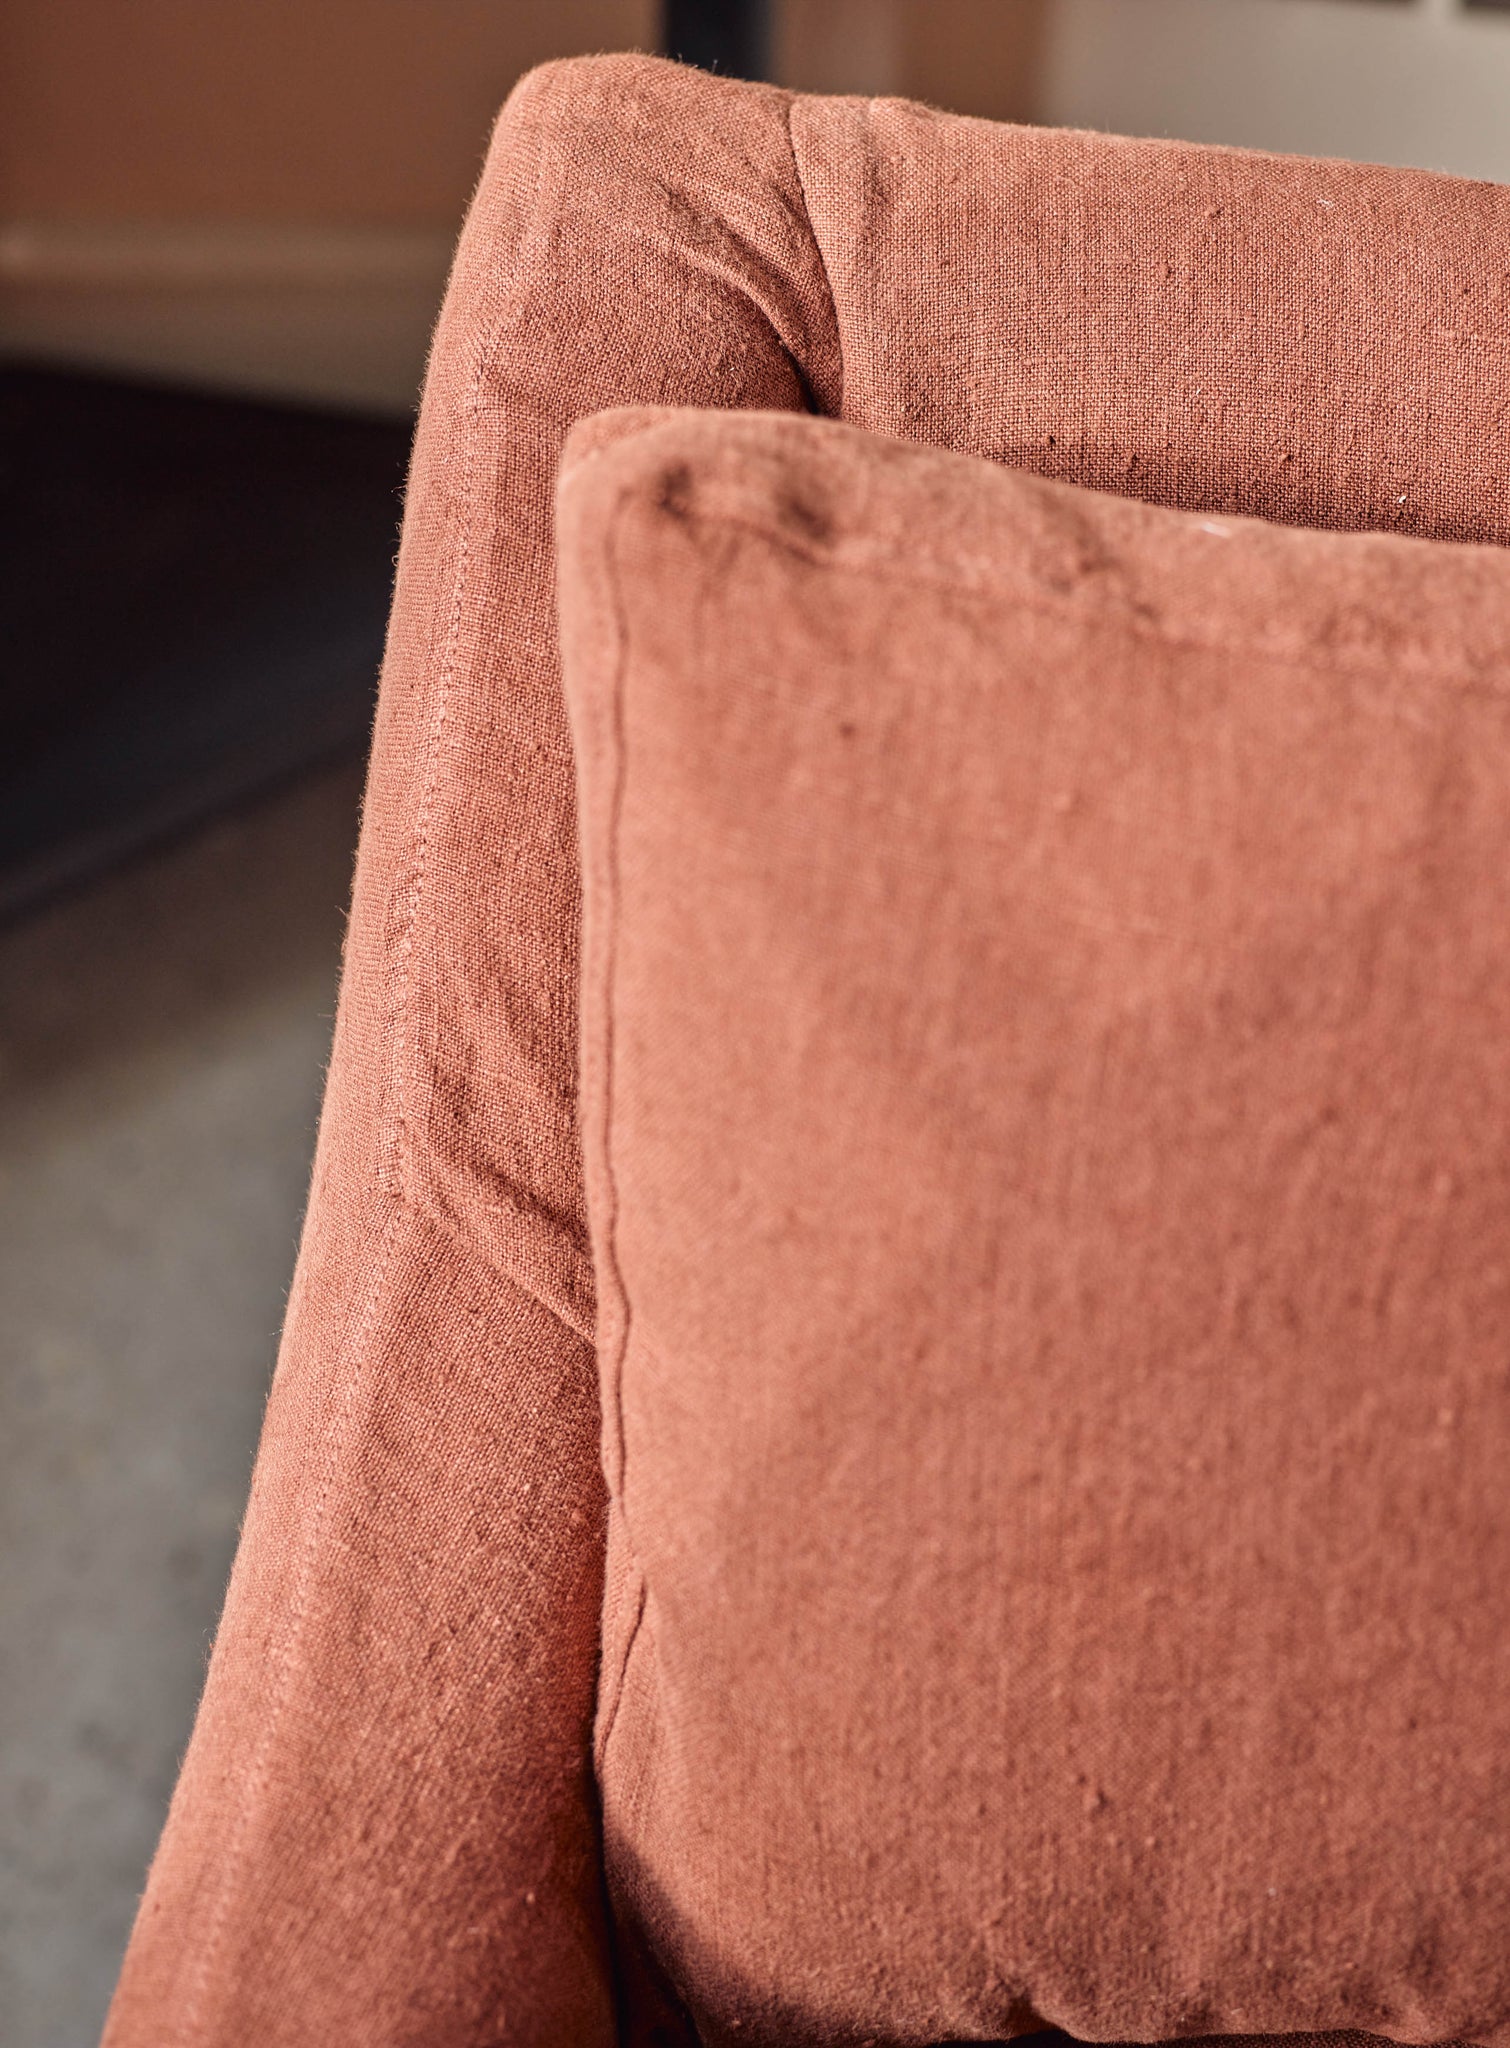 Warren Loose Cover Chaise Sofa, Grey Linen